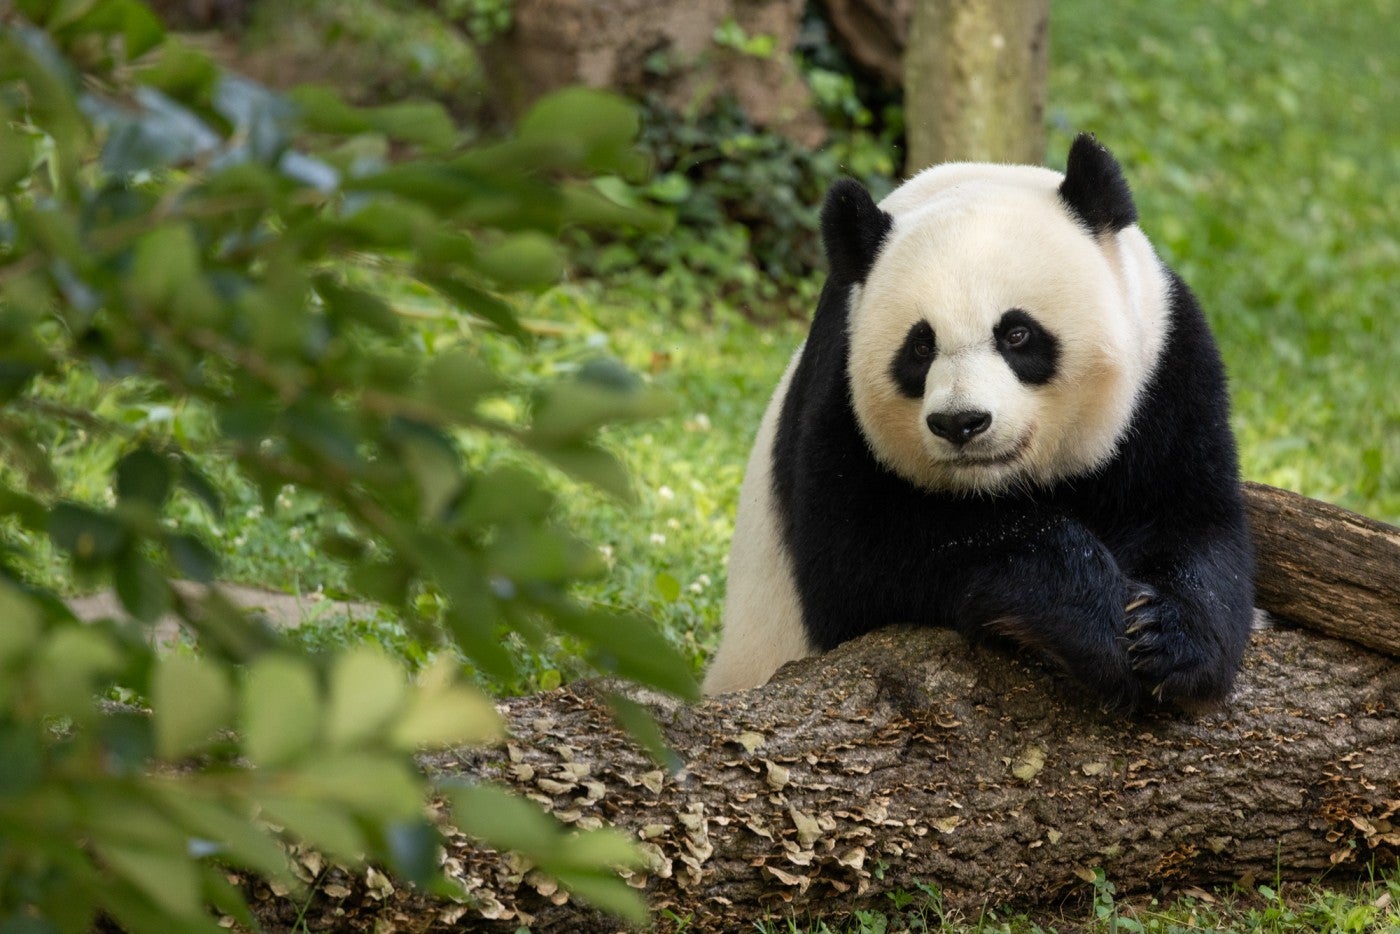 Giant panda Mei Xiang rests on a log in her outdoor habitat.